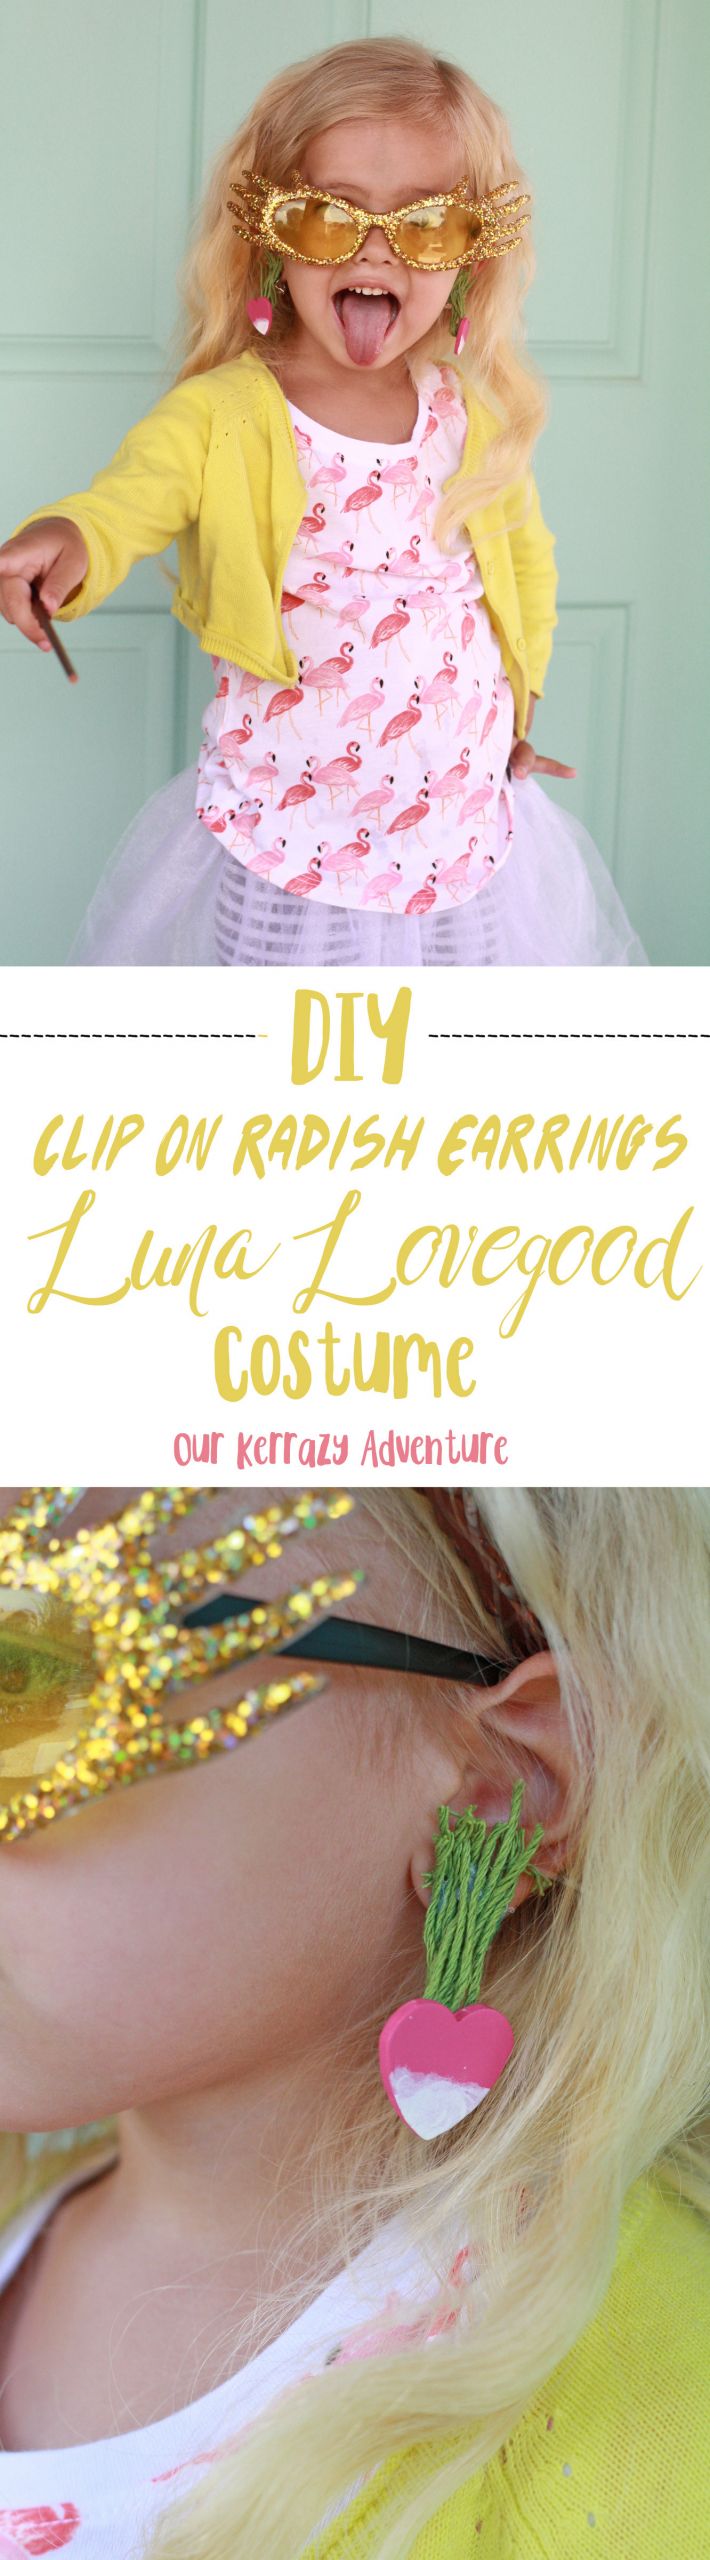 Luna Lovegood Costume DIY
 DIY Radish Earrings Luna Lovegood Costume Our Kerrazy